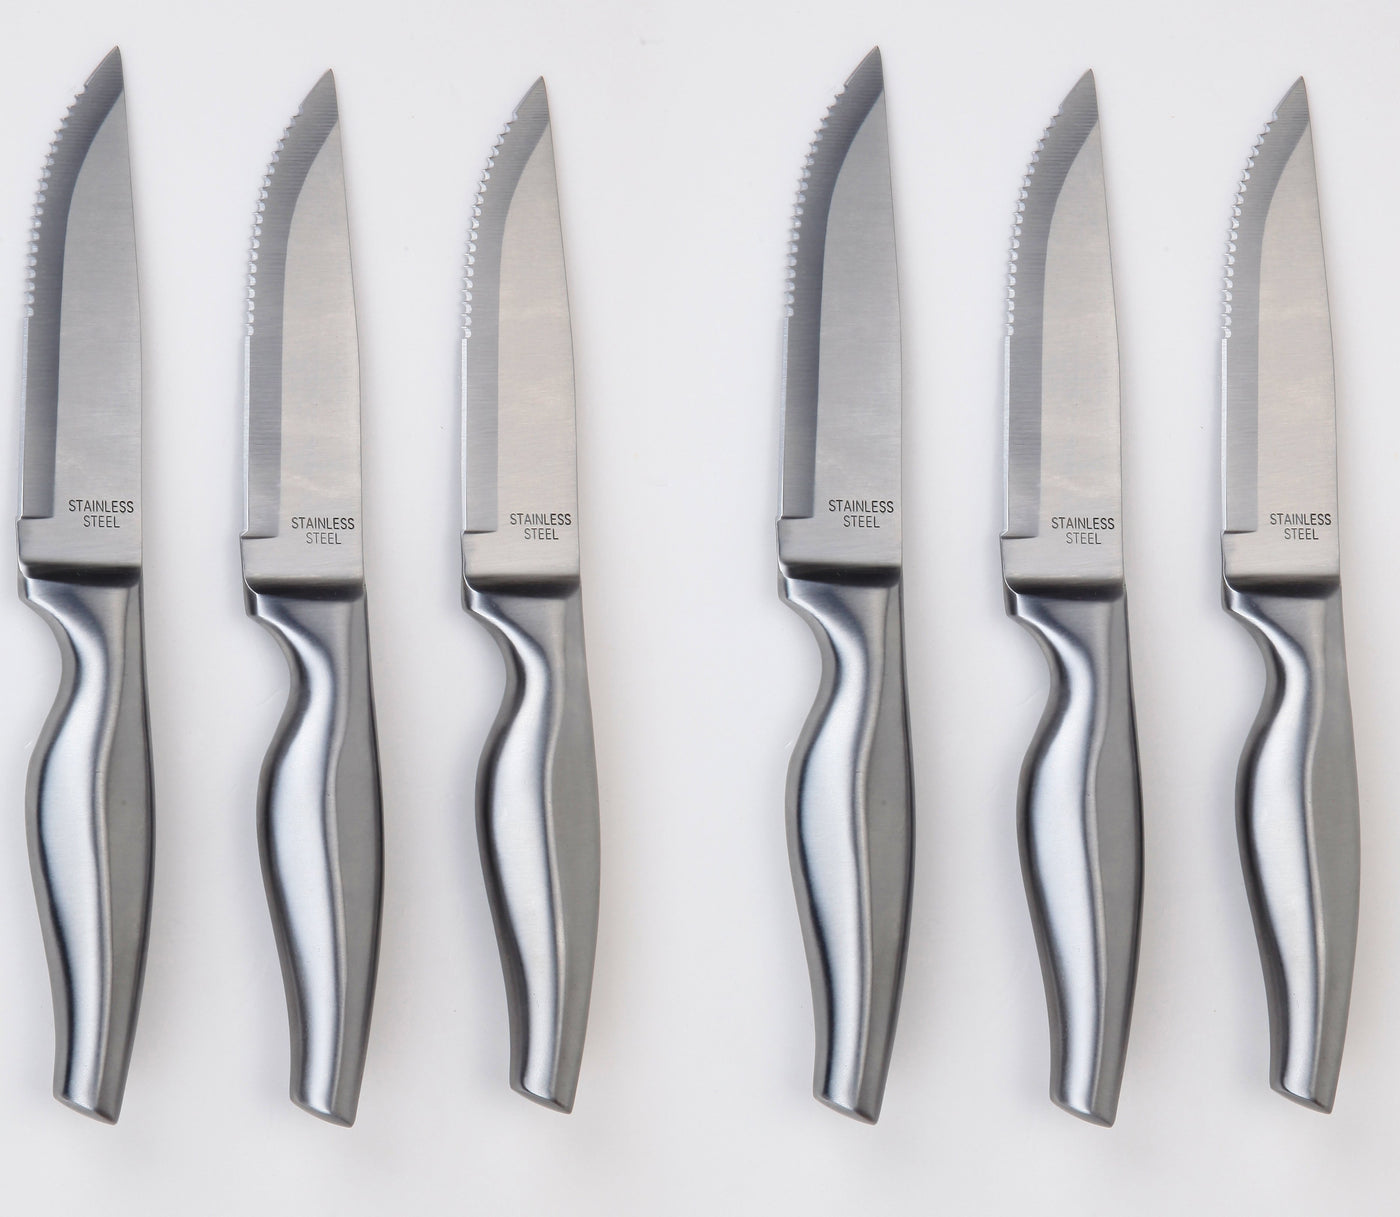 Best Kitchen Knife Sets for Home Use